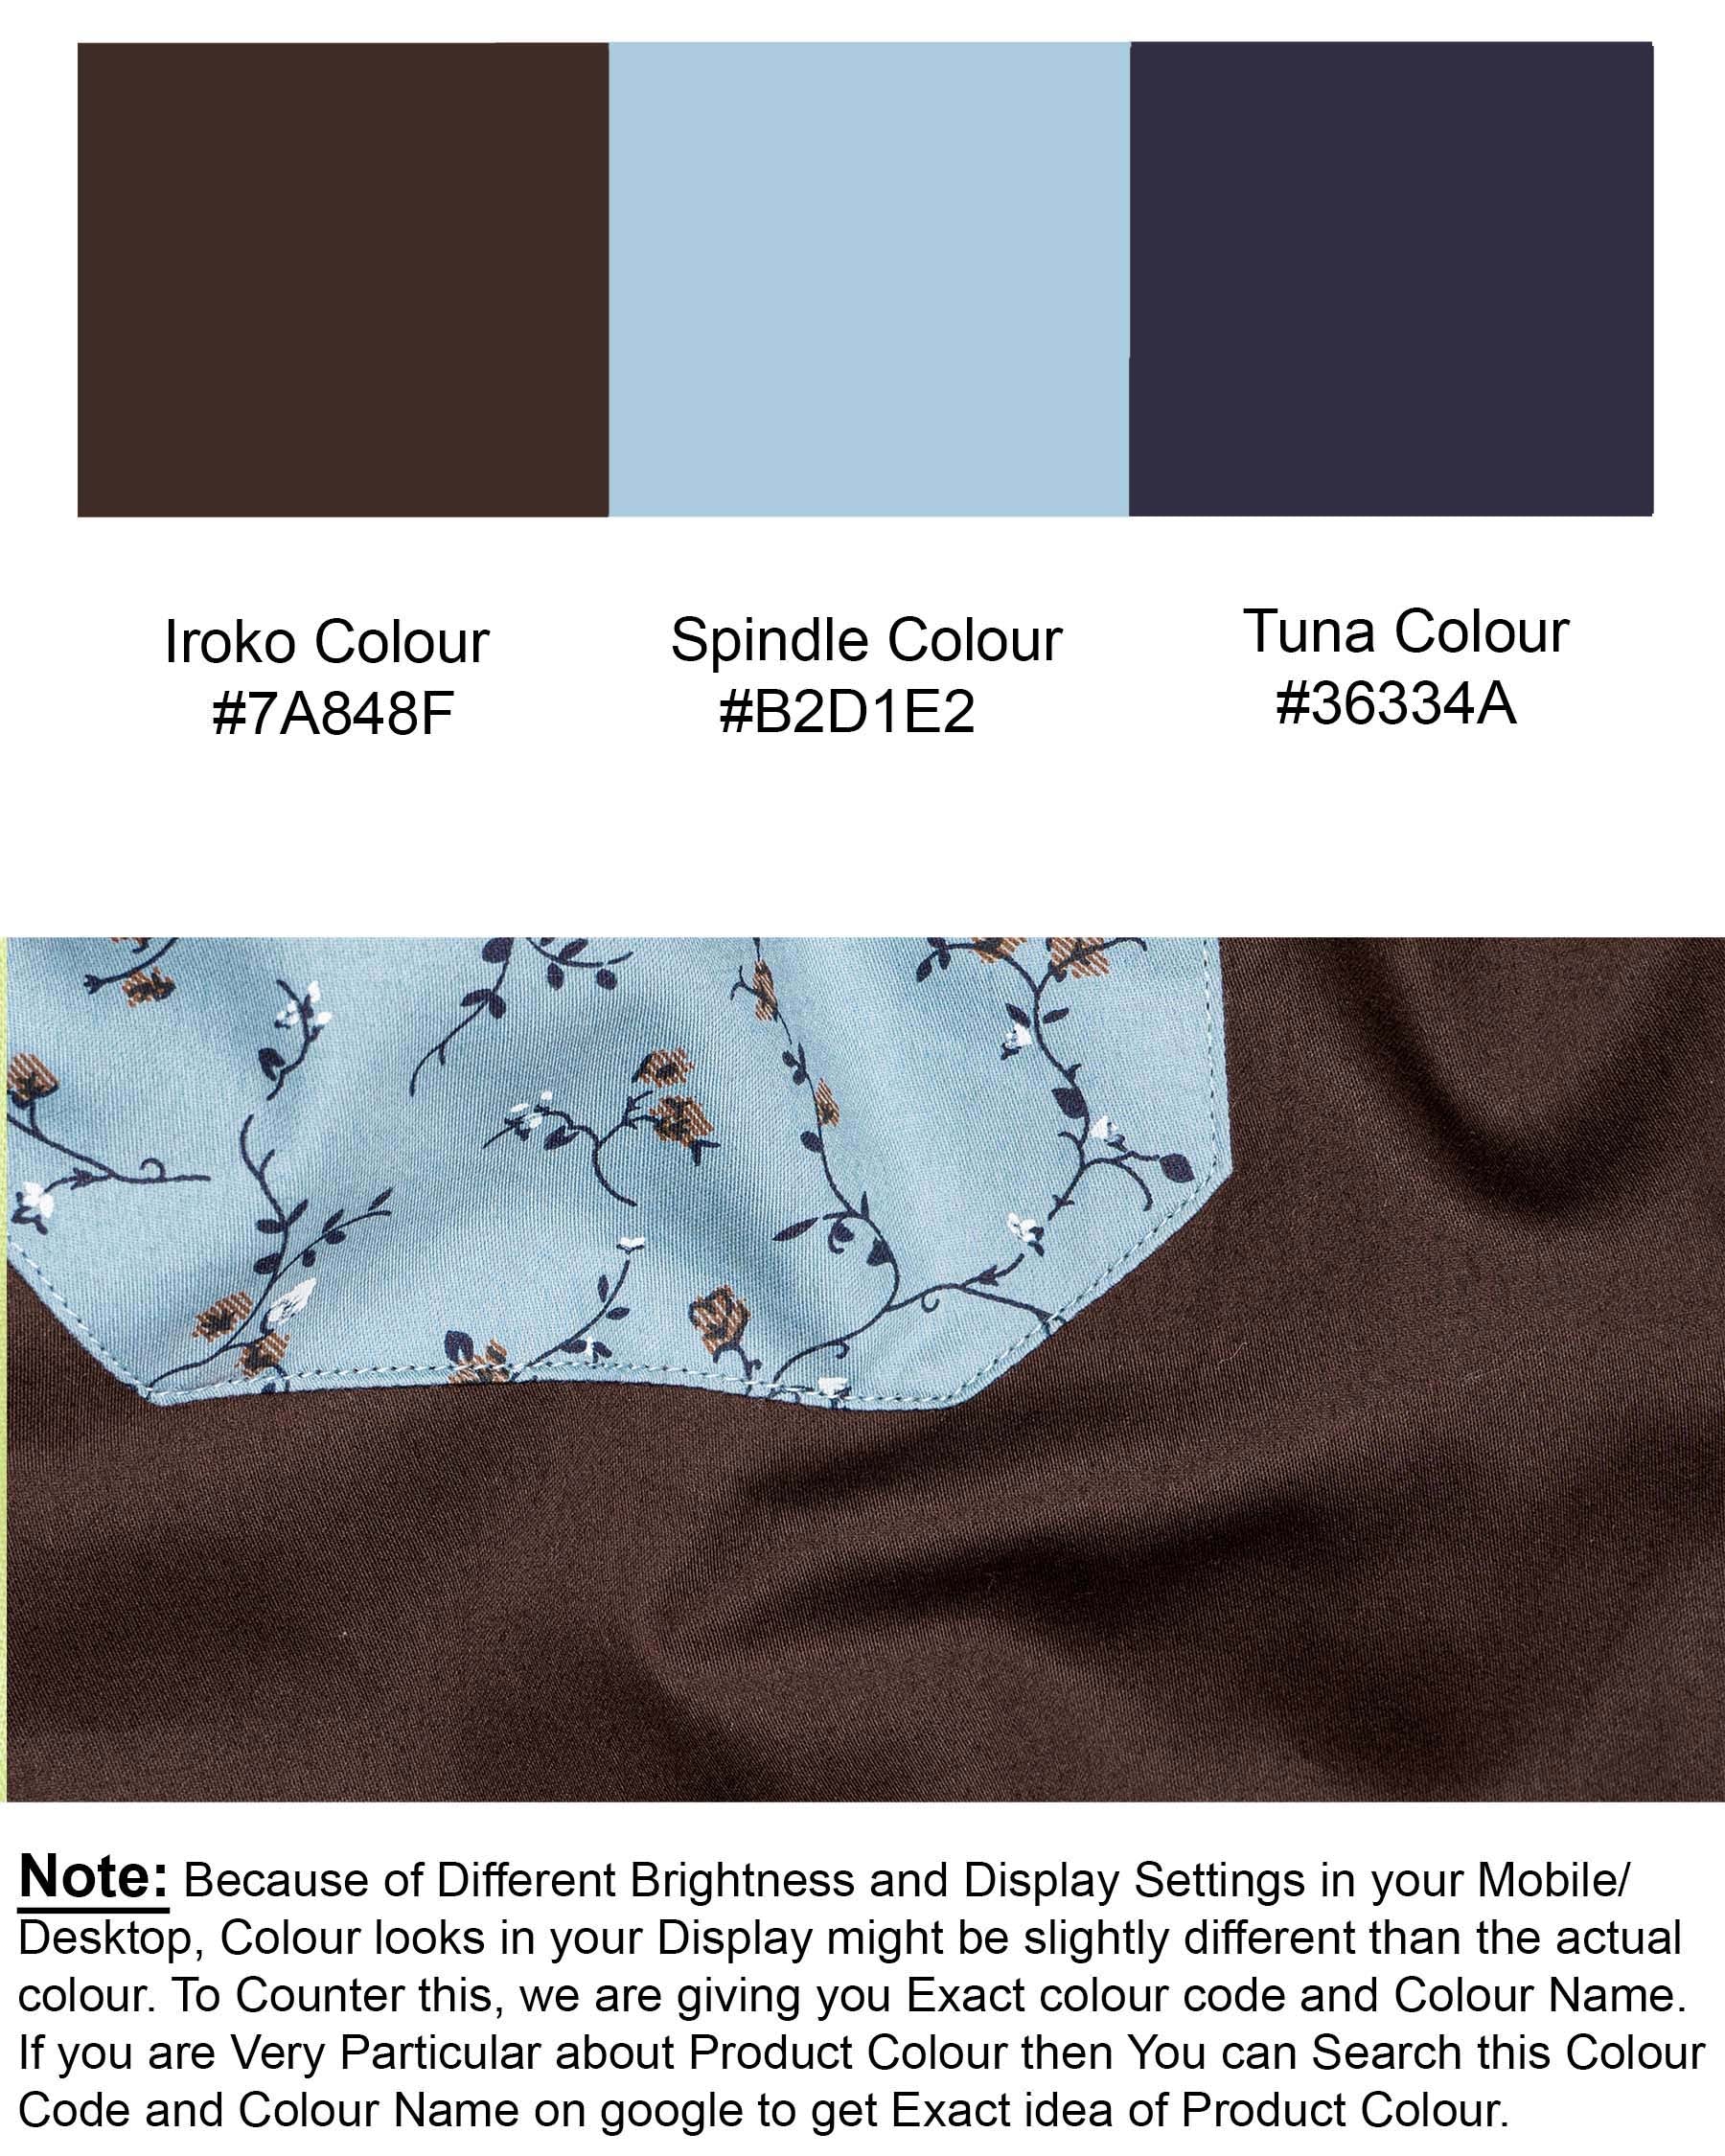 Iroko Brown with Spindle Blue Floral Printed Super Soft Premium Cotton Designer Shirt 6940-P38-38,6940-P38-H-38,6940-P38-39,6940-P38-H-39,6940-P38-40,6940-P38-H-40,6940-P38-42,6940-P38-H-42,6940-P38-44,6940-P38-H-44,6940-P38-46,6940-P38-H-46,6940-P38-48,6940-P38-H-48,6940-P38-50,6940-P38-H-50,6940-P38-52,6940-P38-H-52